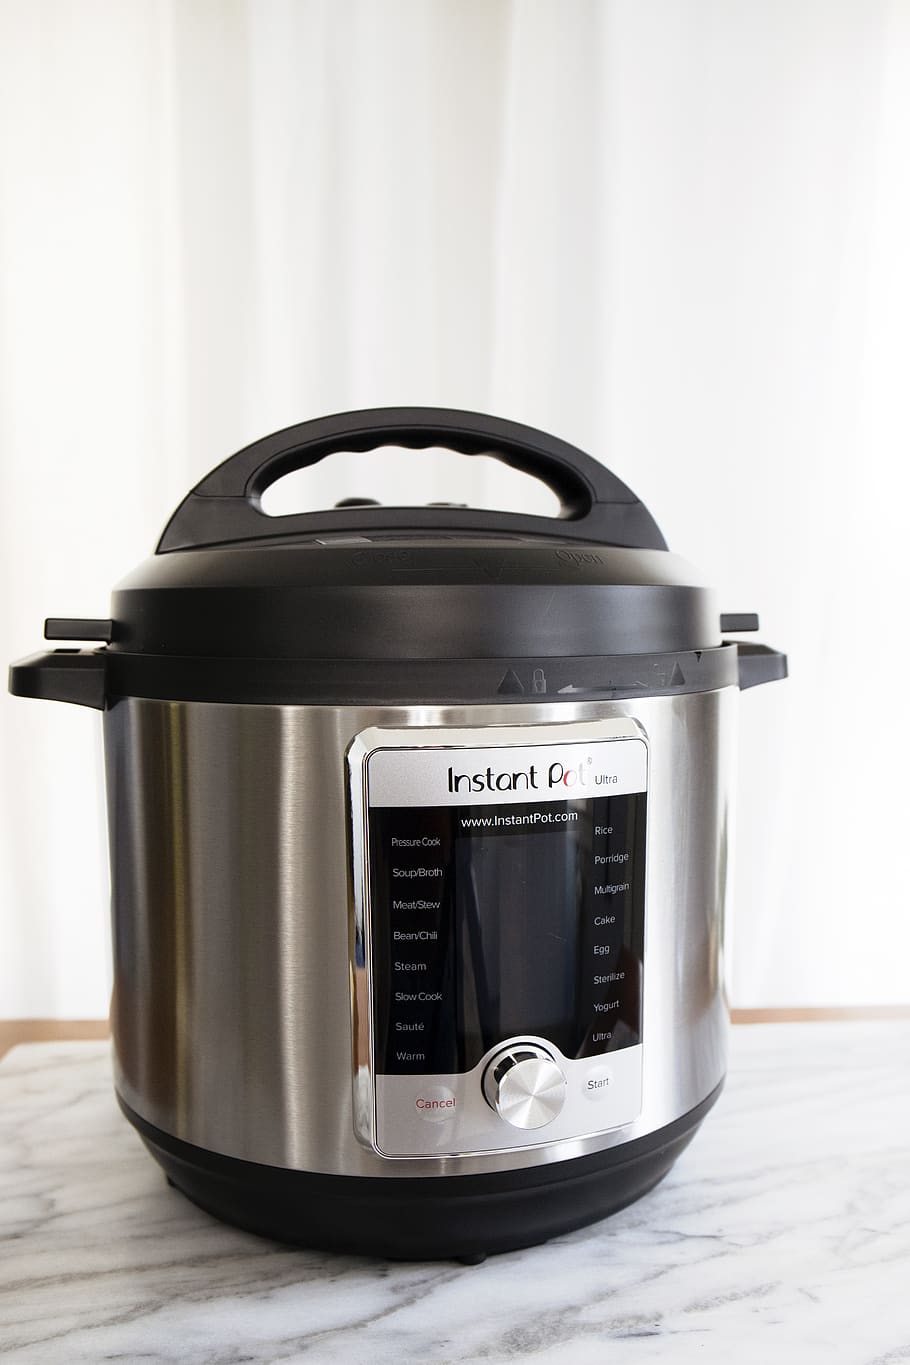 gra yand black rice cooker, appliance, slow cooker, mixer, steamer